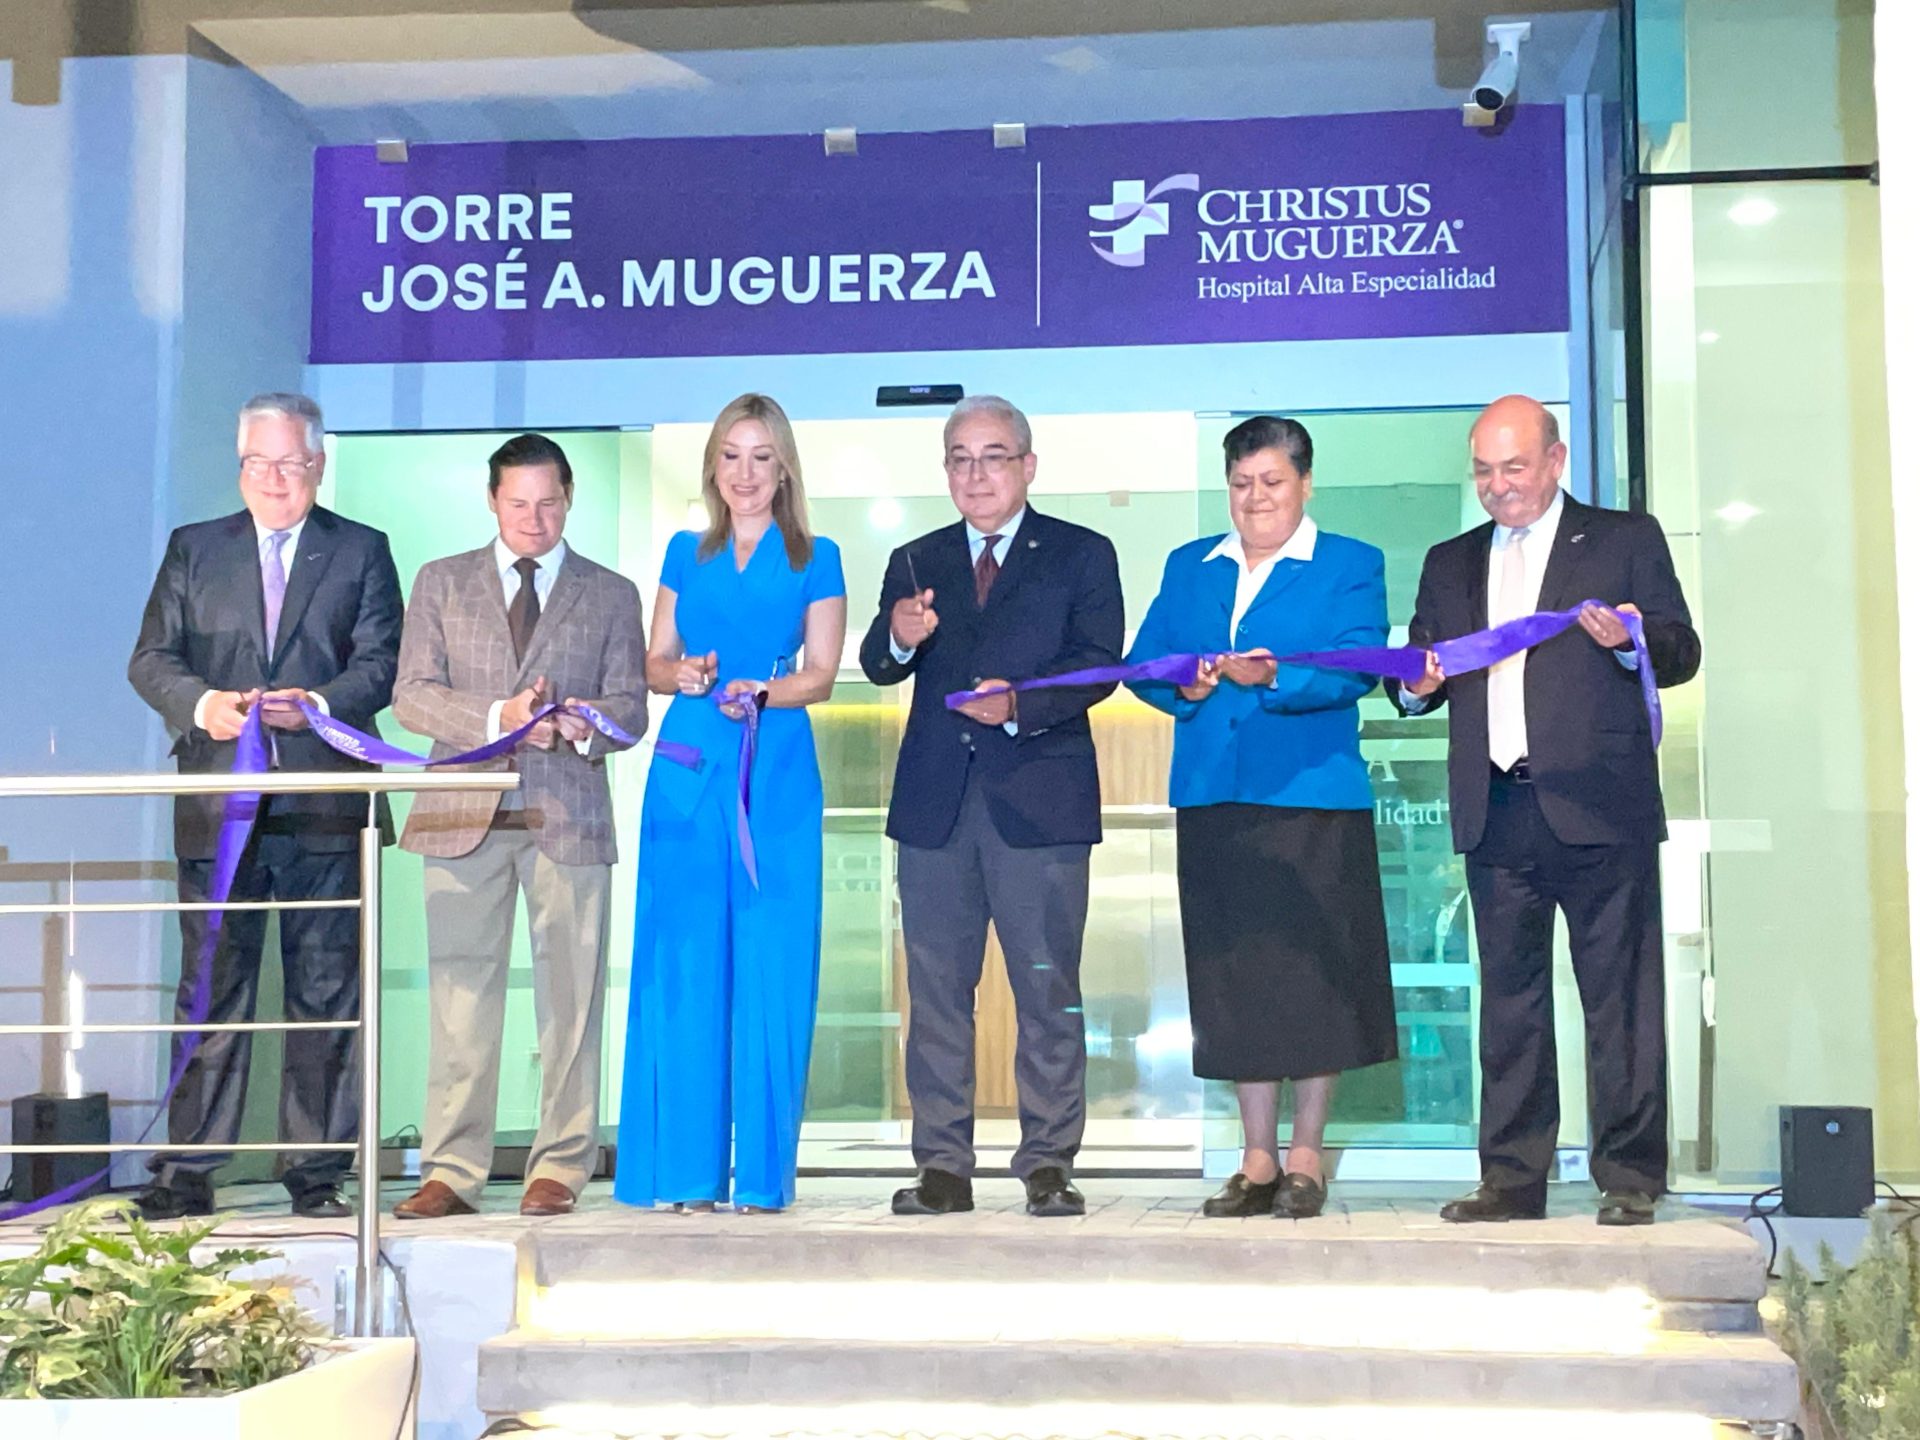 Inauguración de Torre médica José A. Muguerza